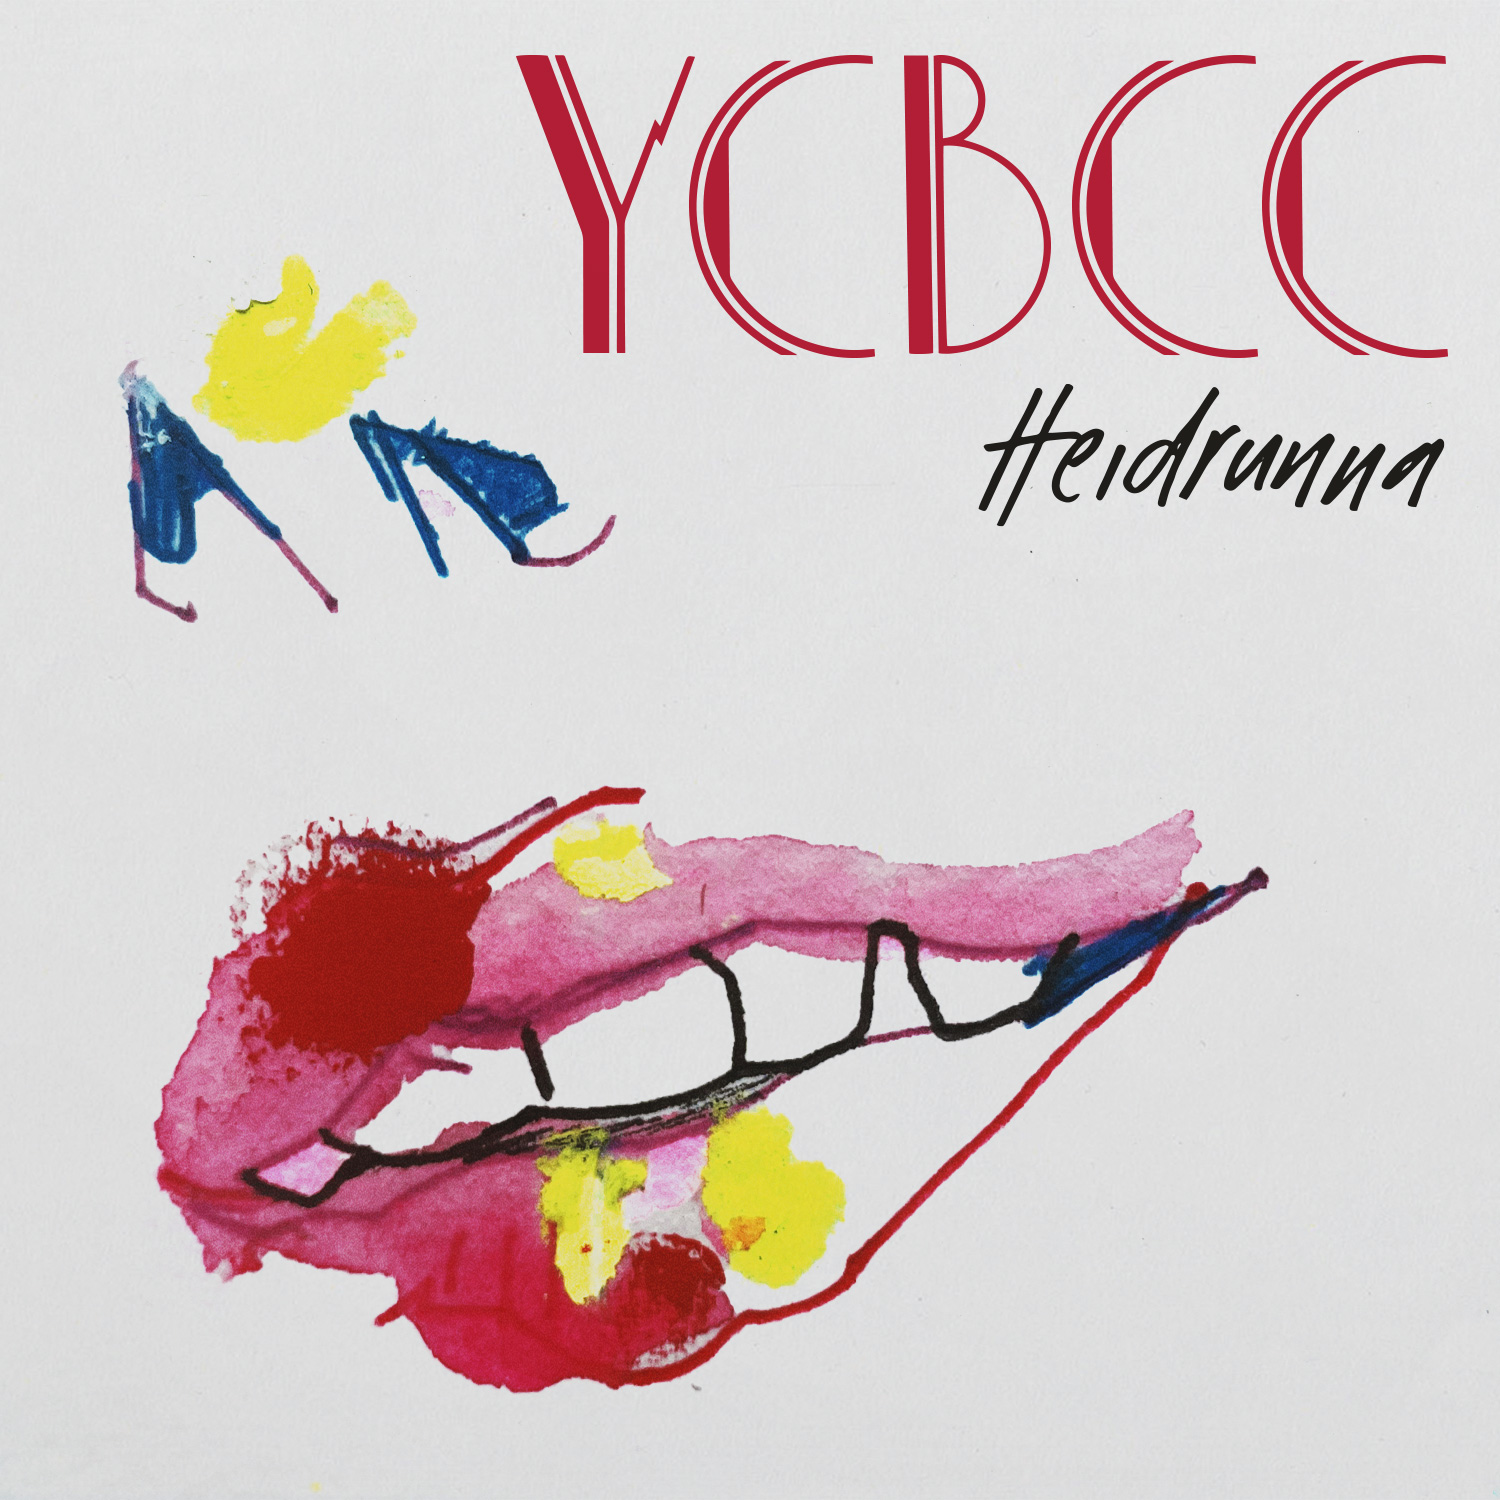 LISTEN | “YCBCC” by Heidrunna